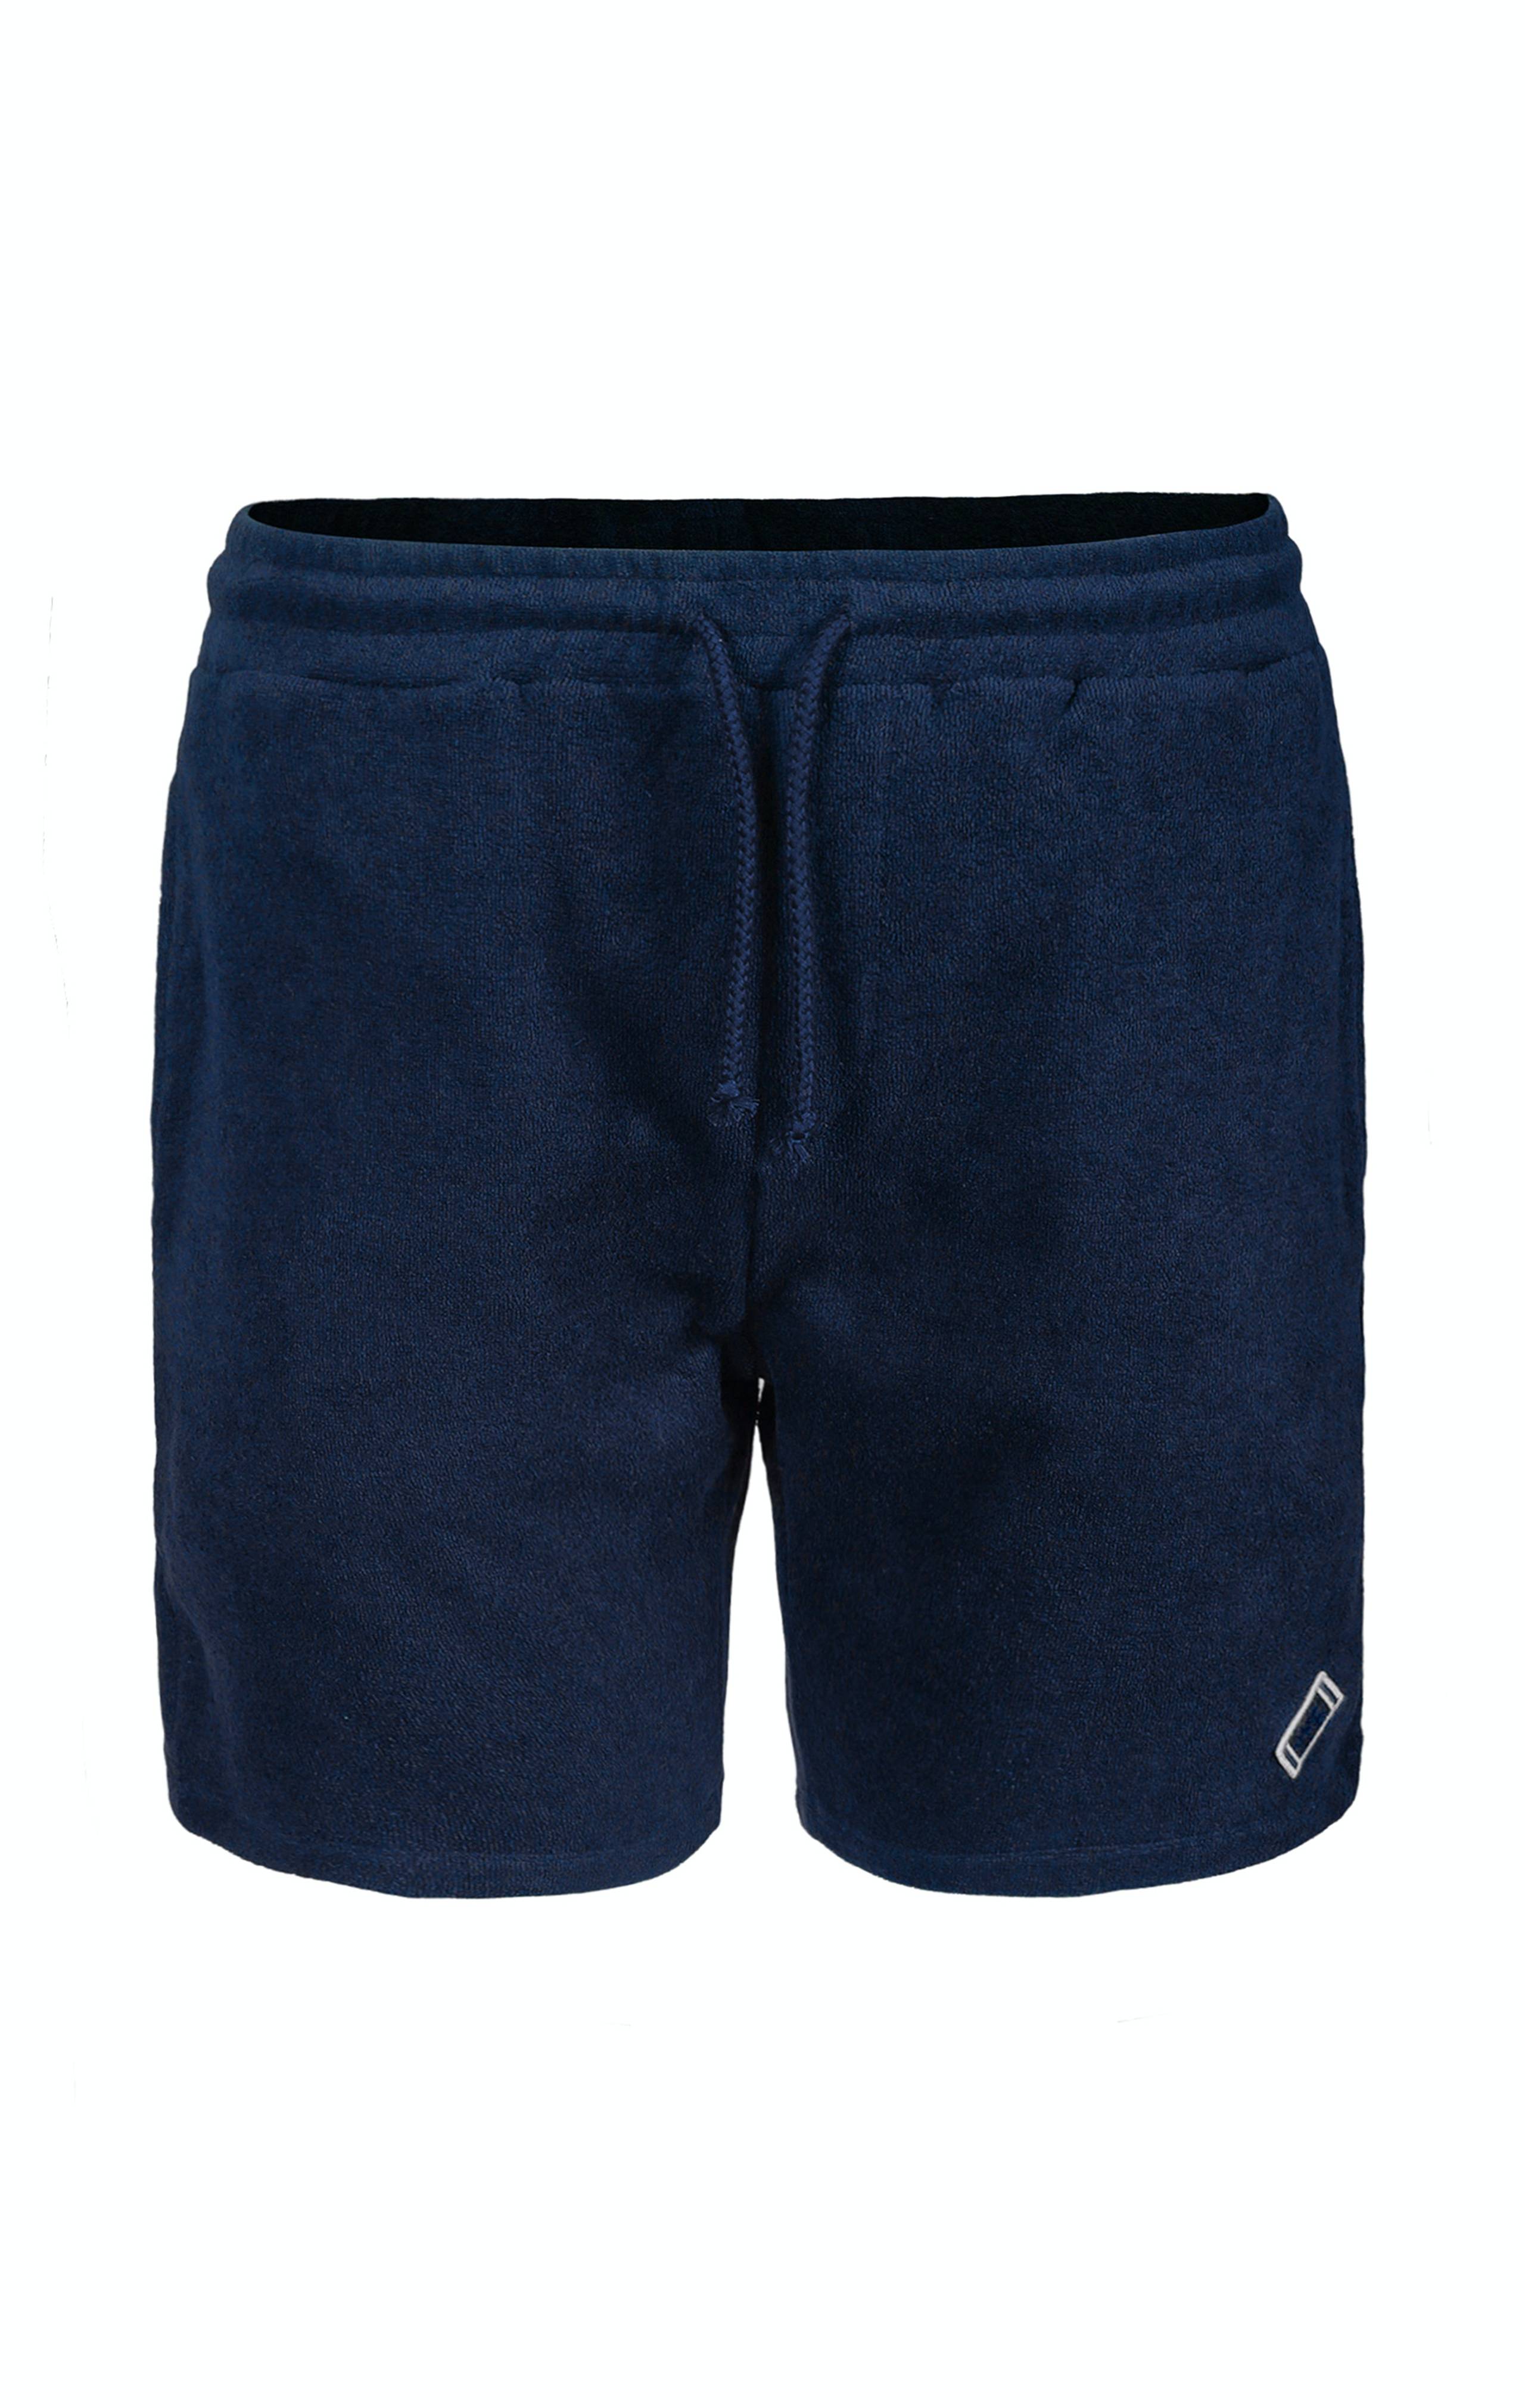 Onepiece Towel Club Shorts Navy - 1